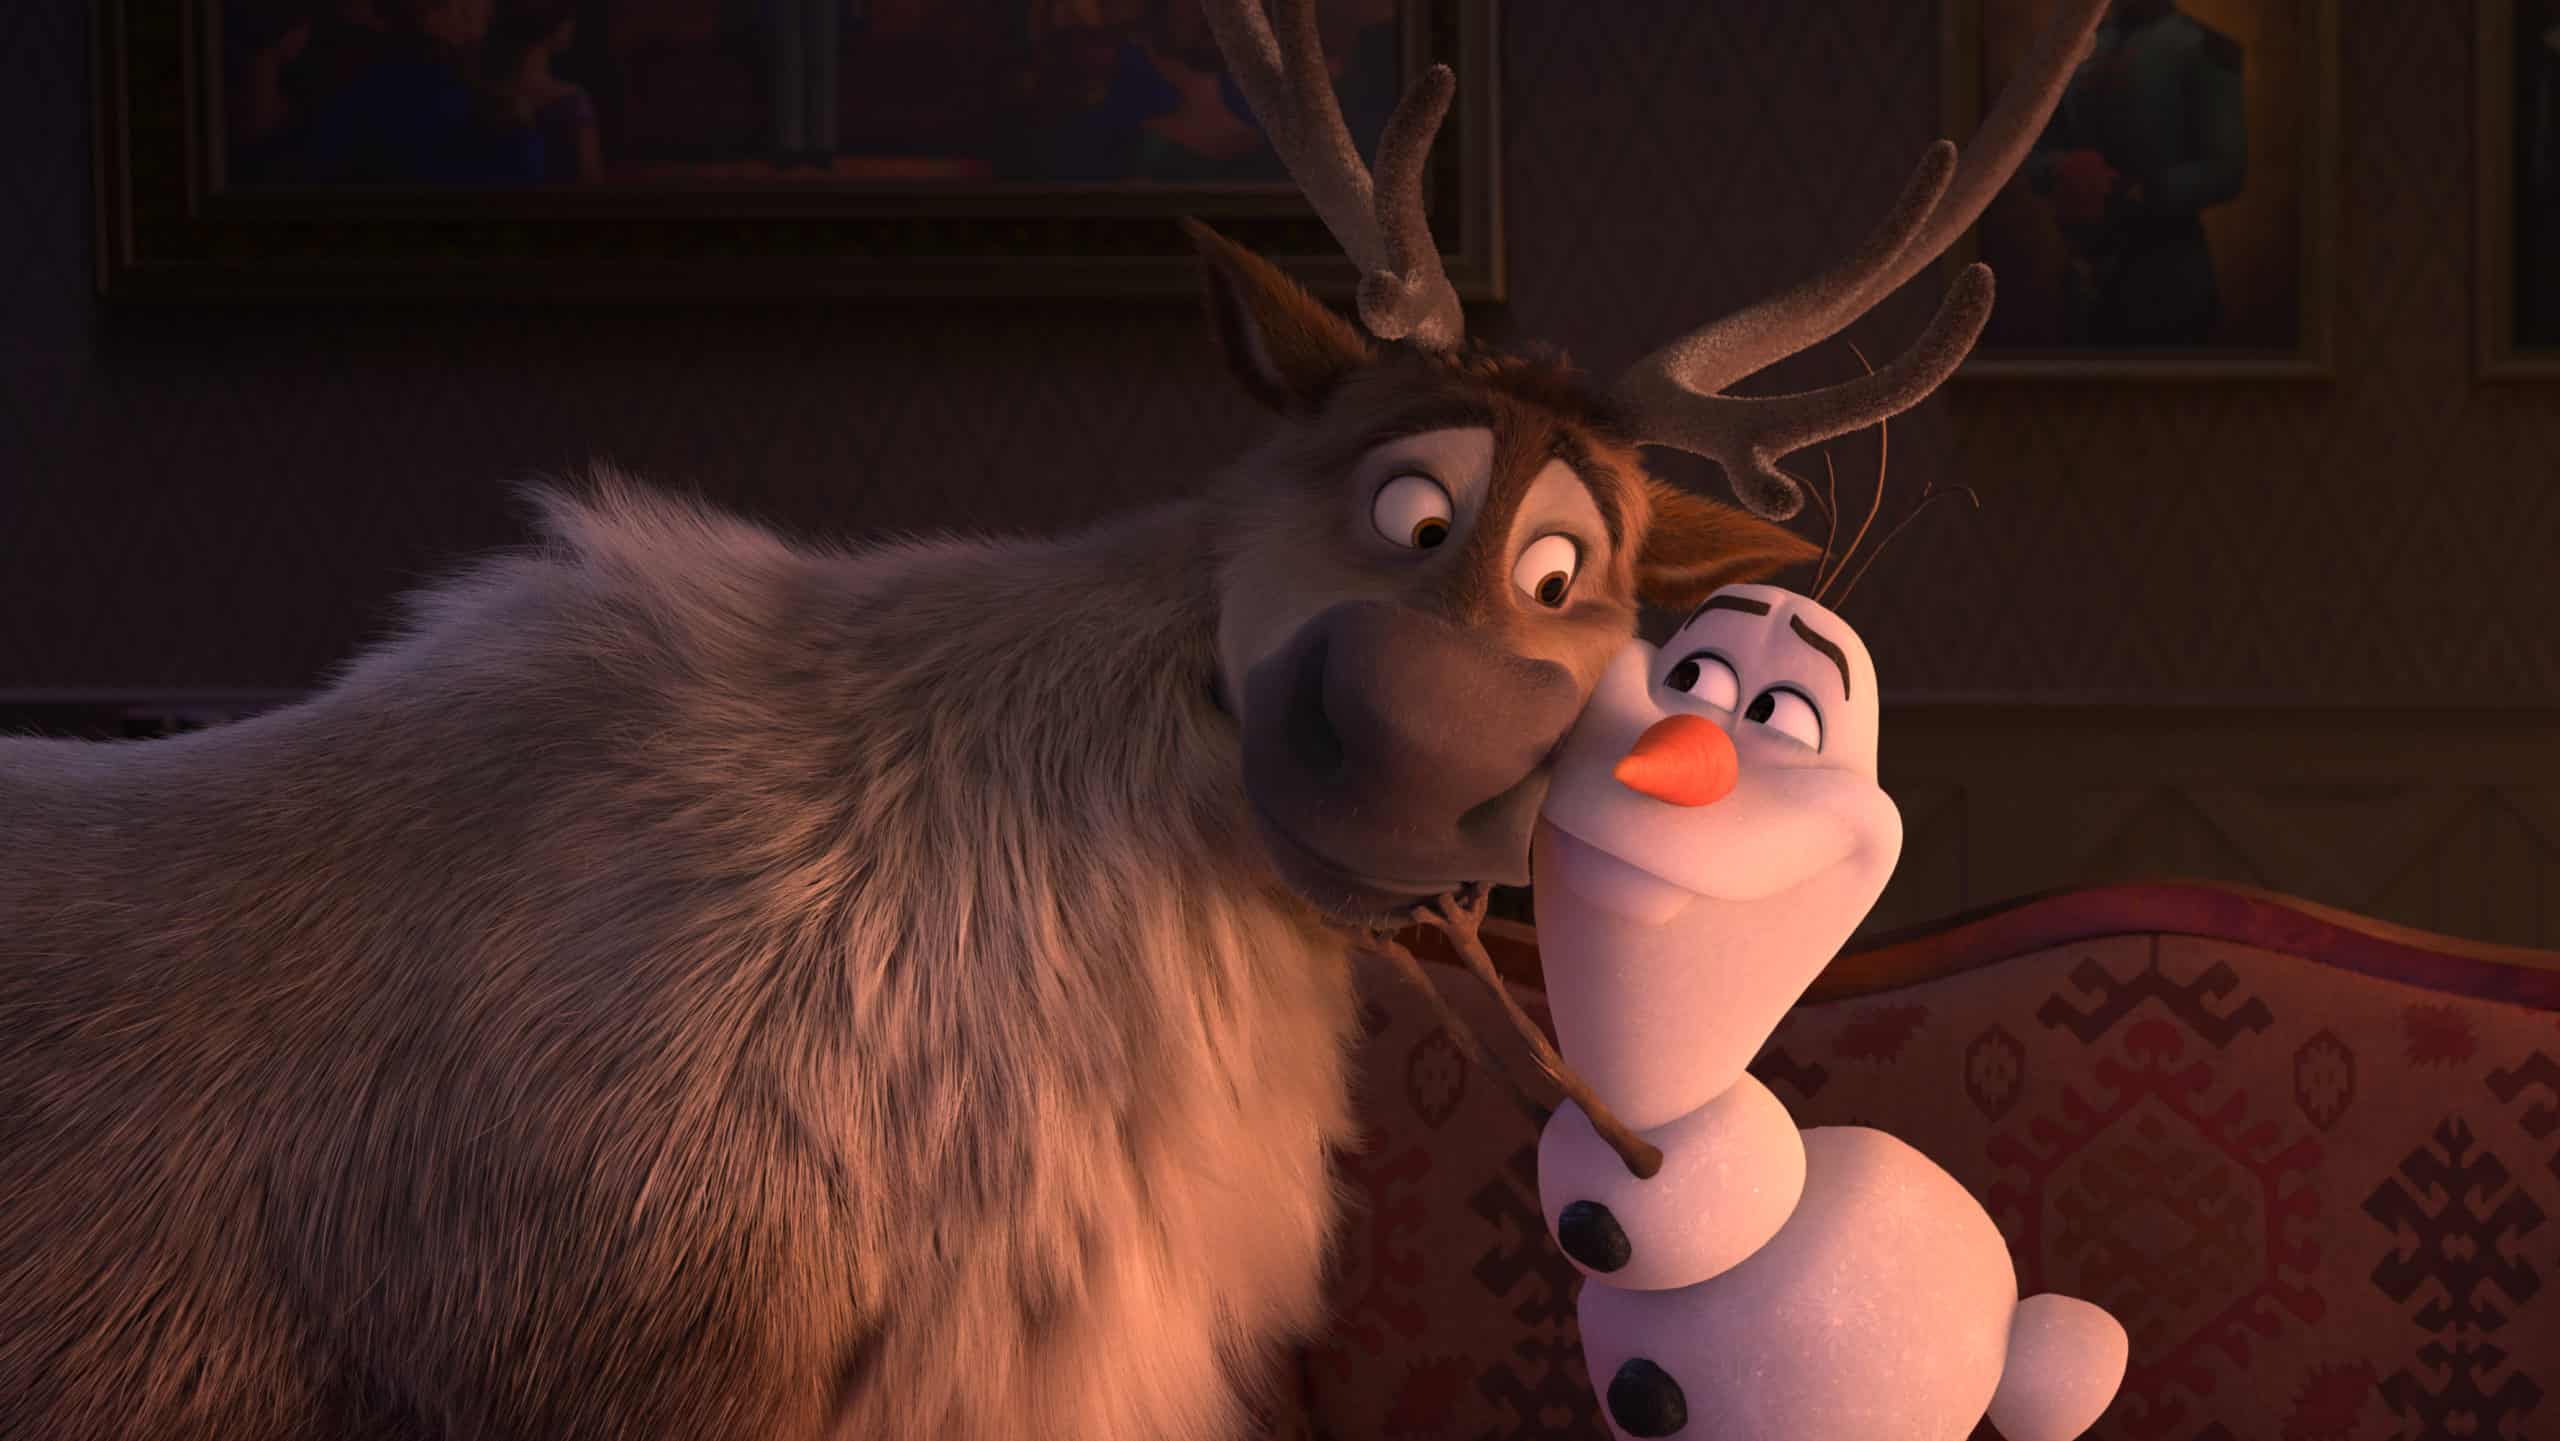 Olaf and Sven